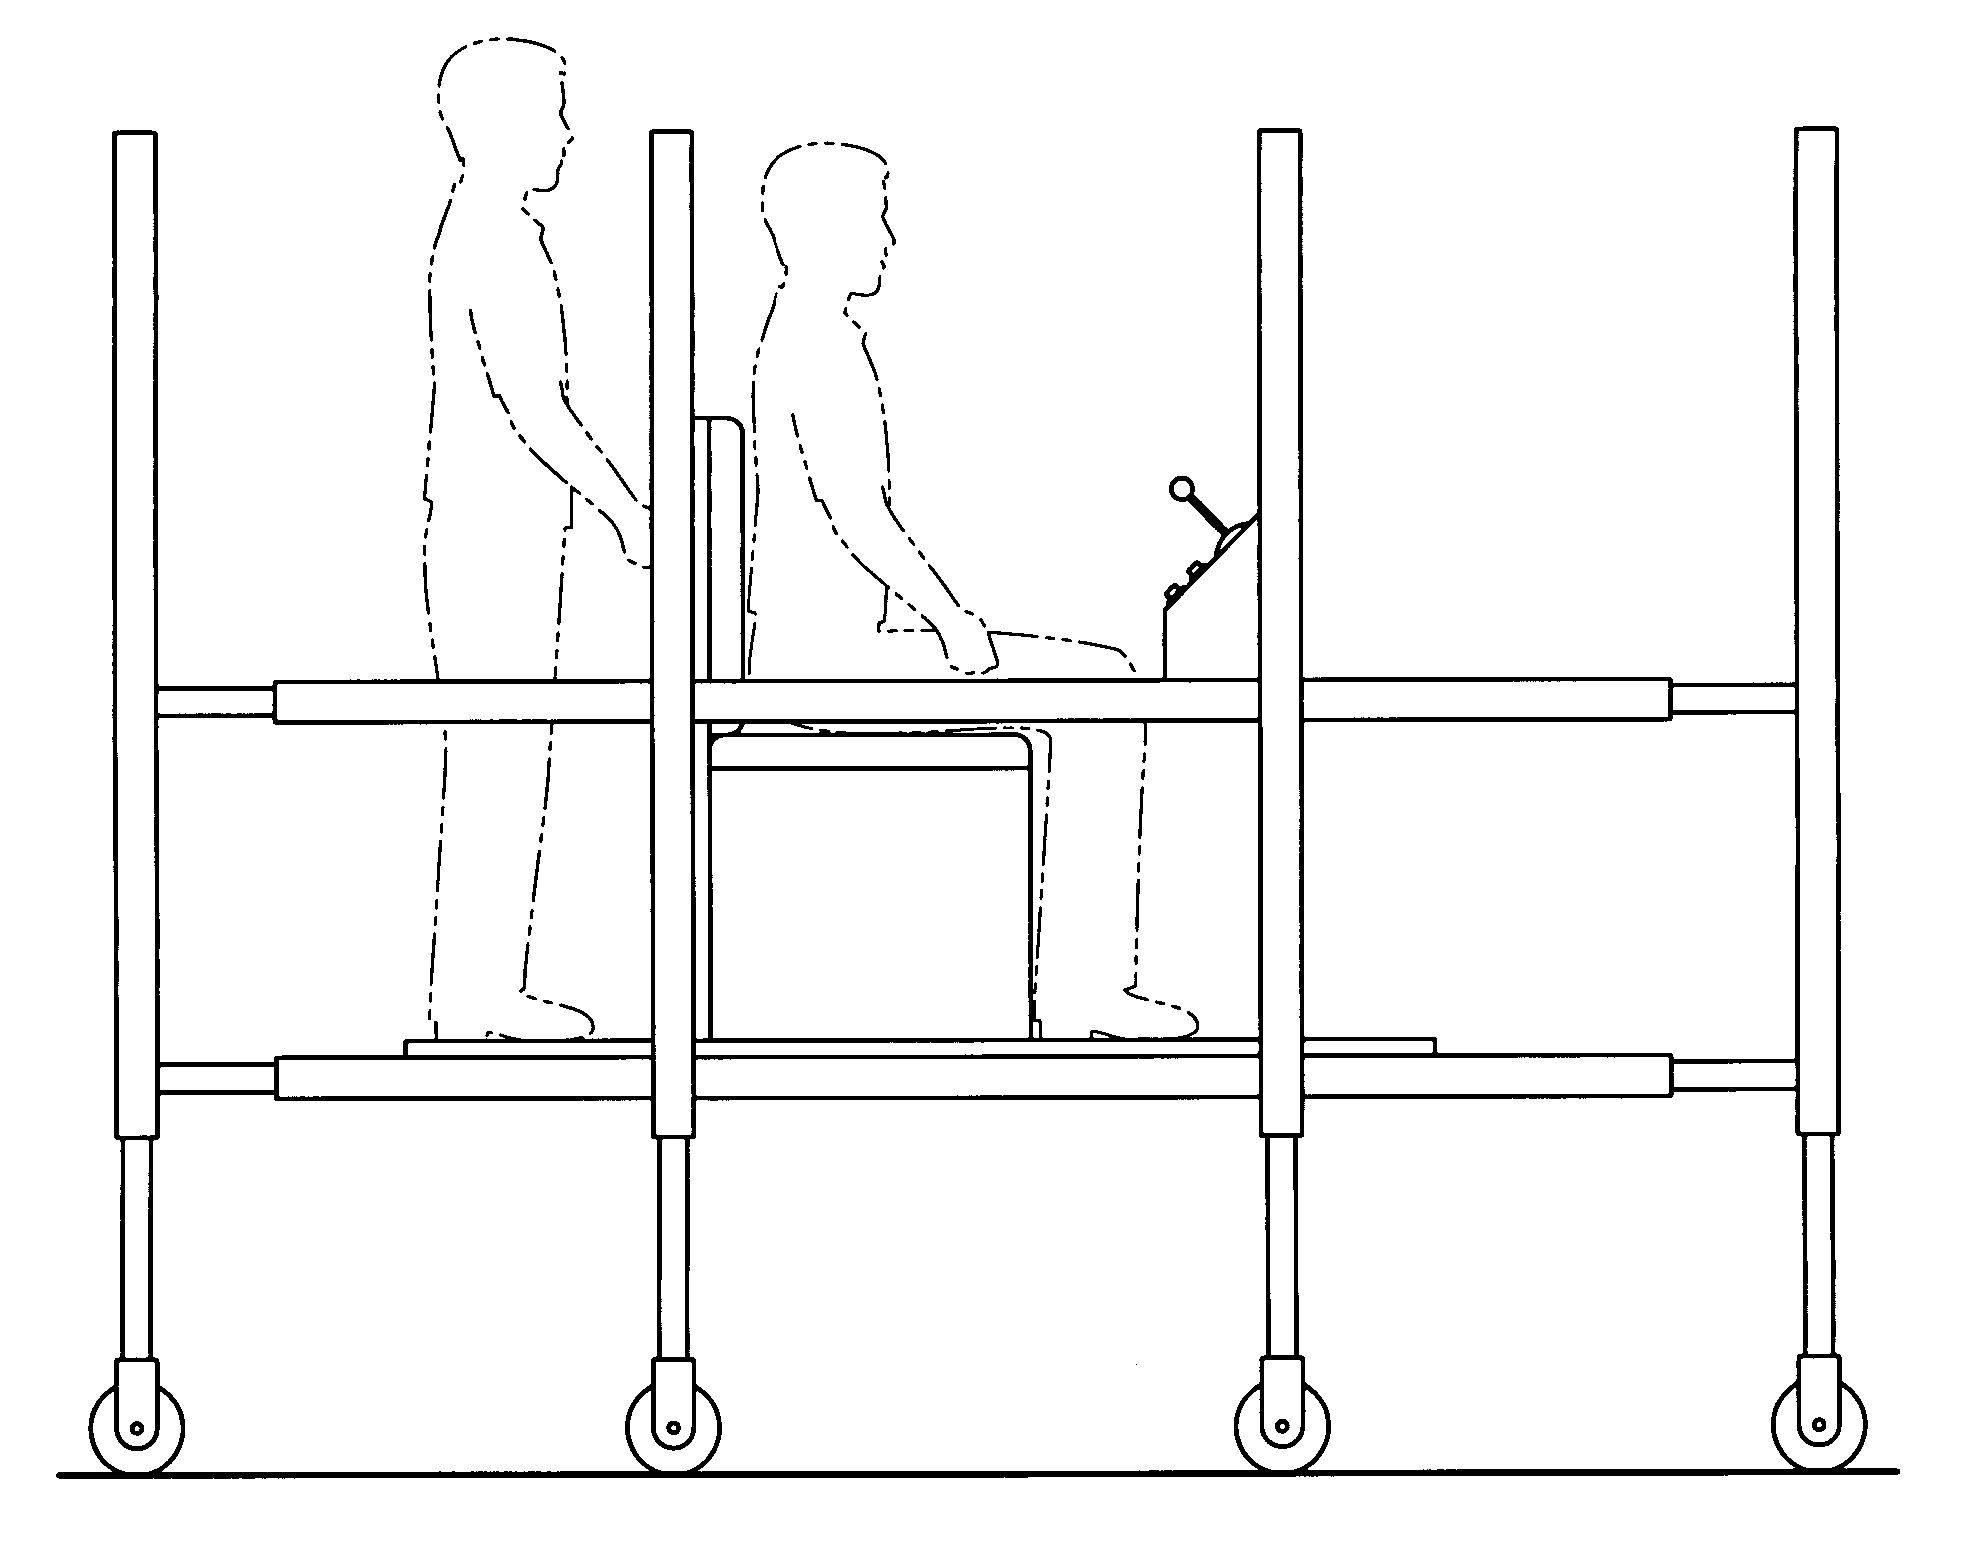 Stair-climbing human transporter